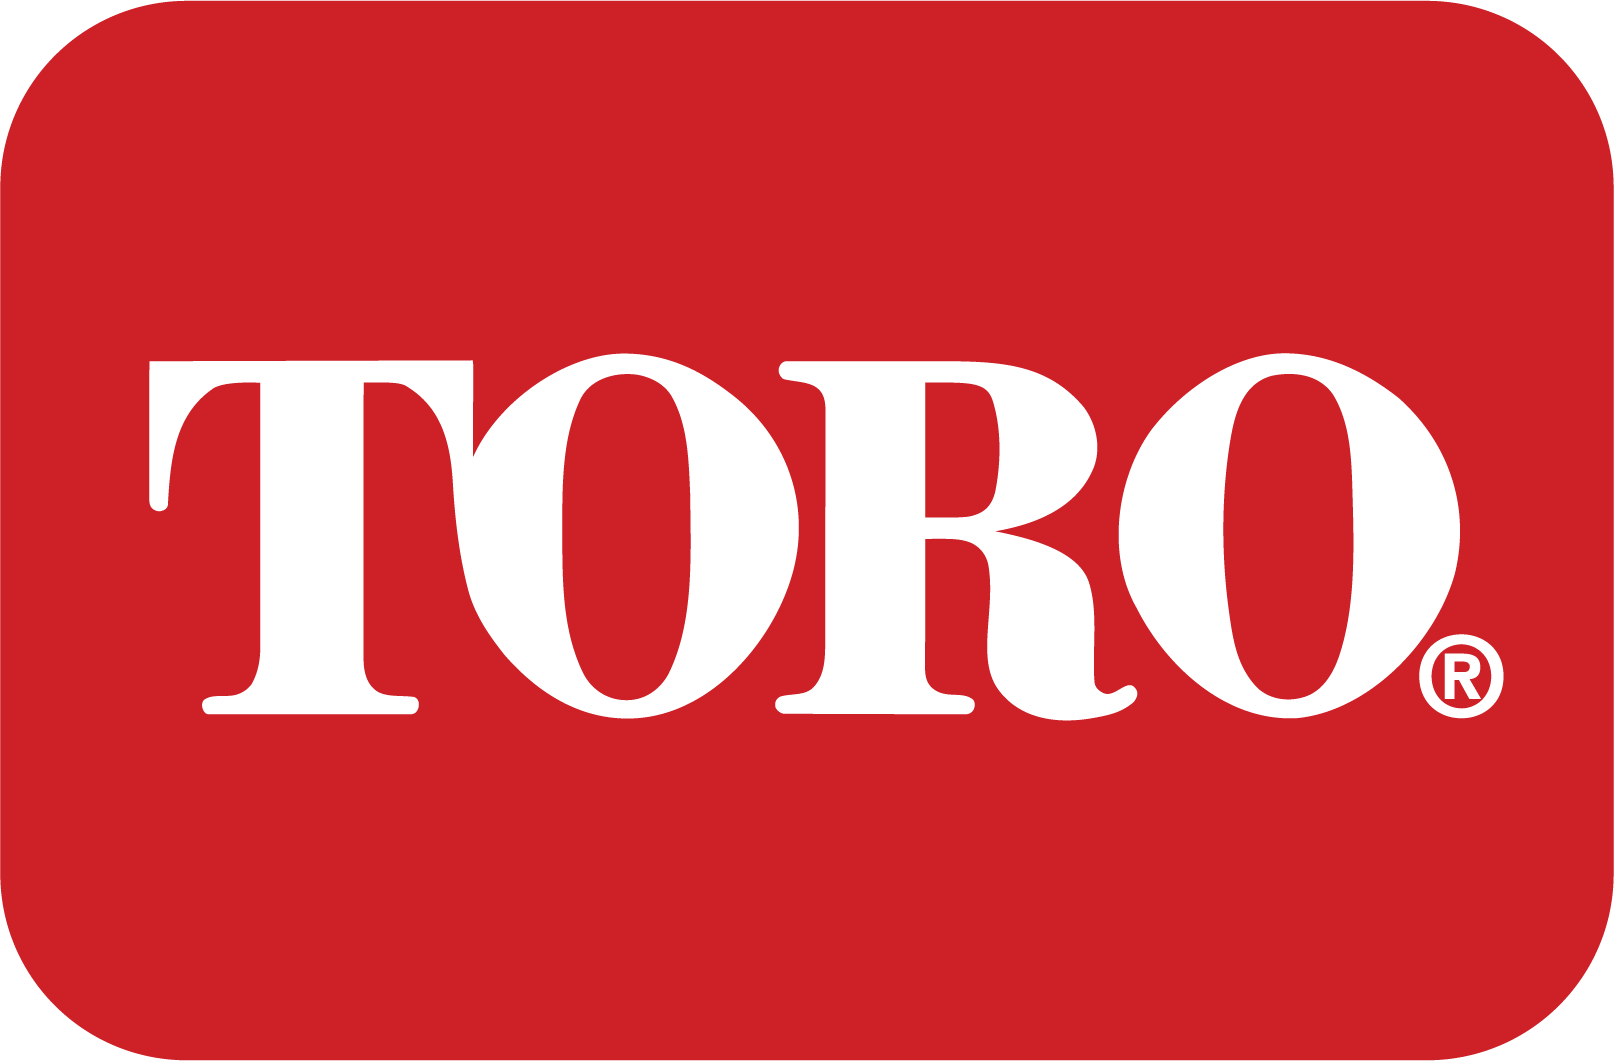 Toro Logo